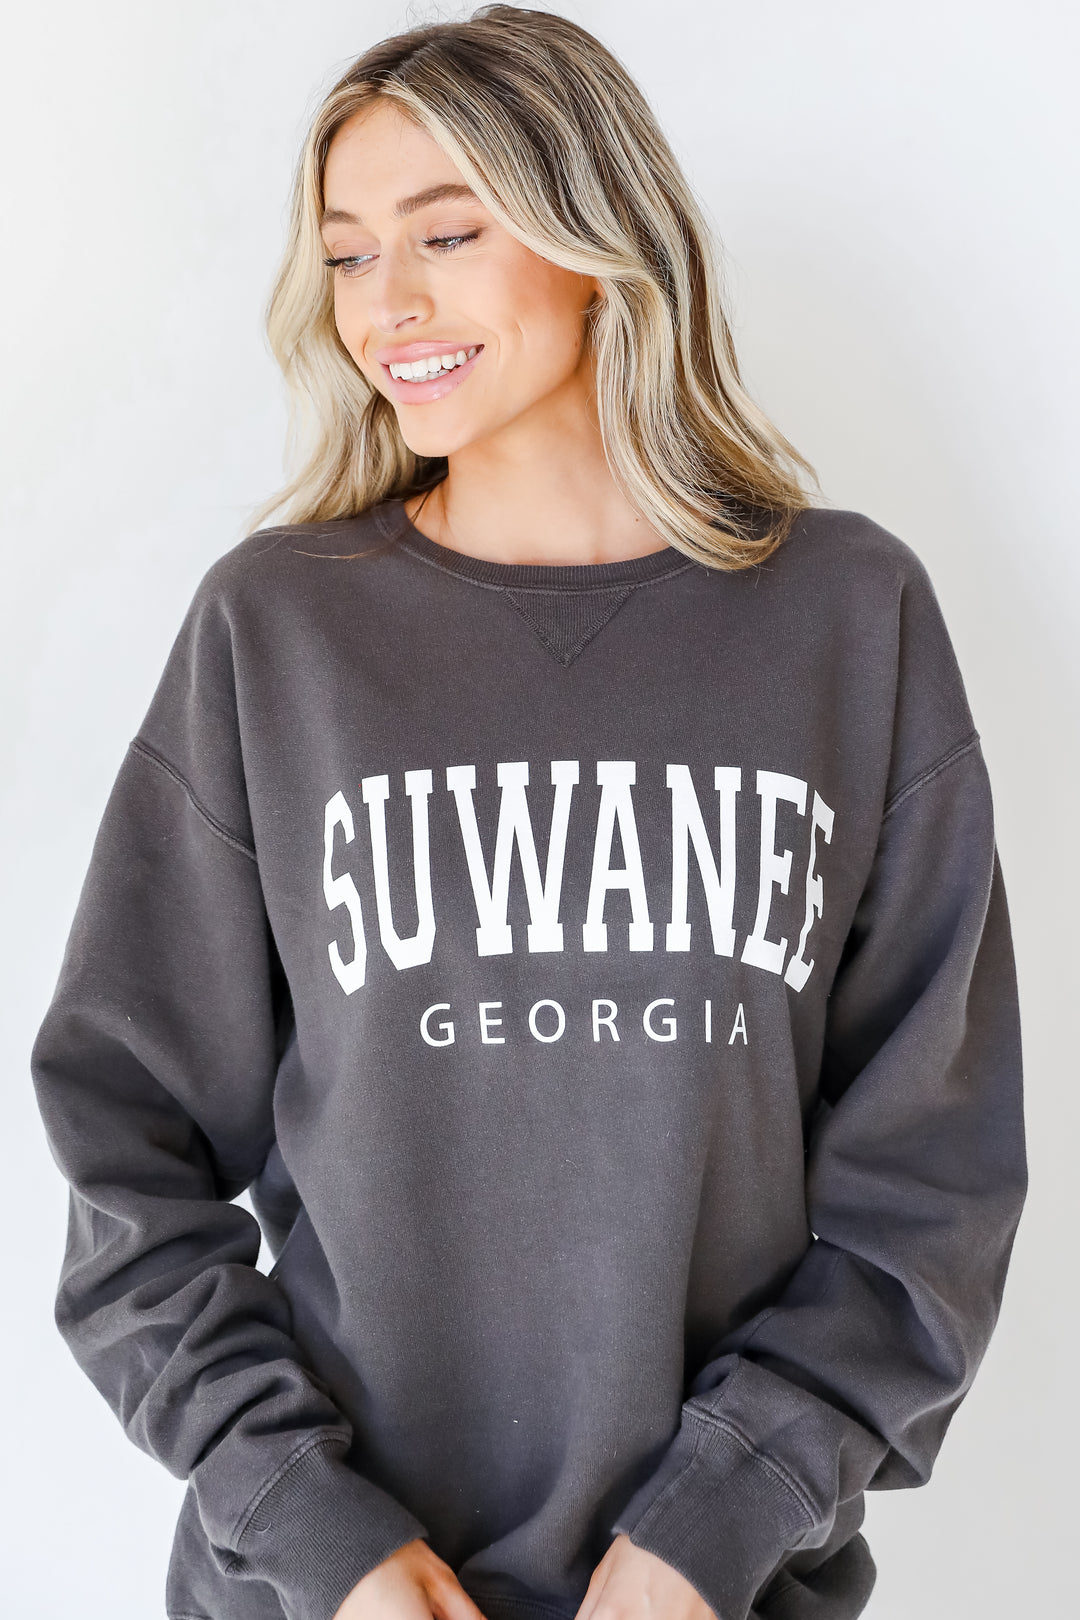 Suwanee Georgia Pullover. Graphic Sweatshirt. Georgia Sweatshirt, comfy, oversized